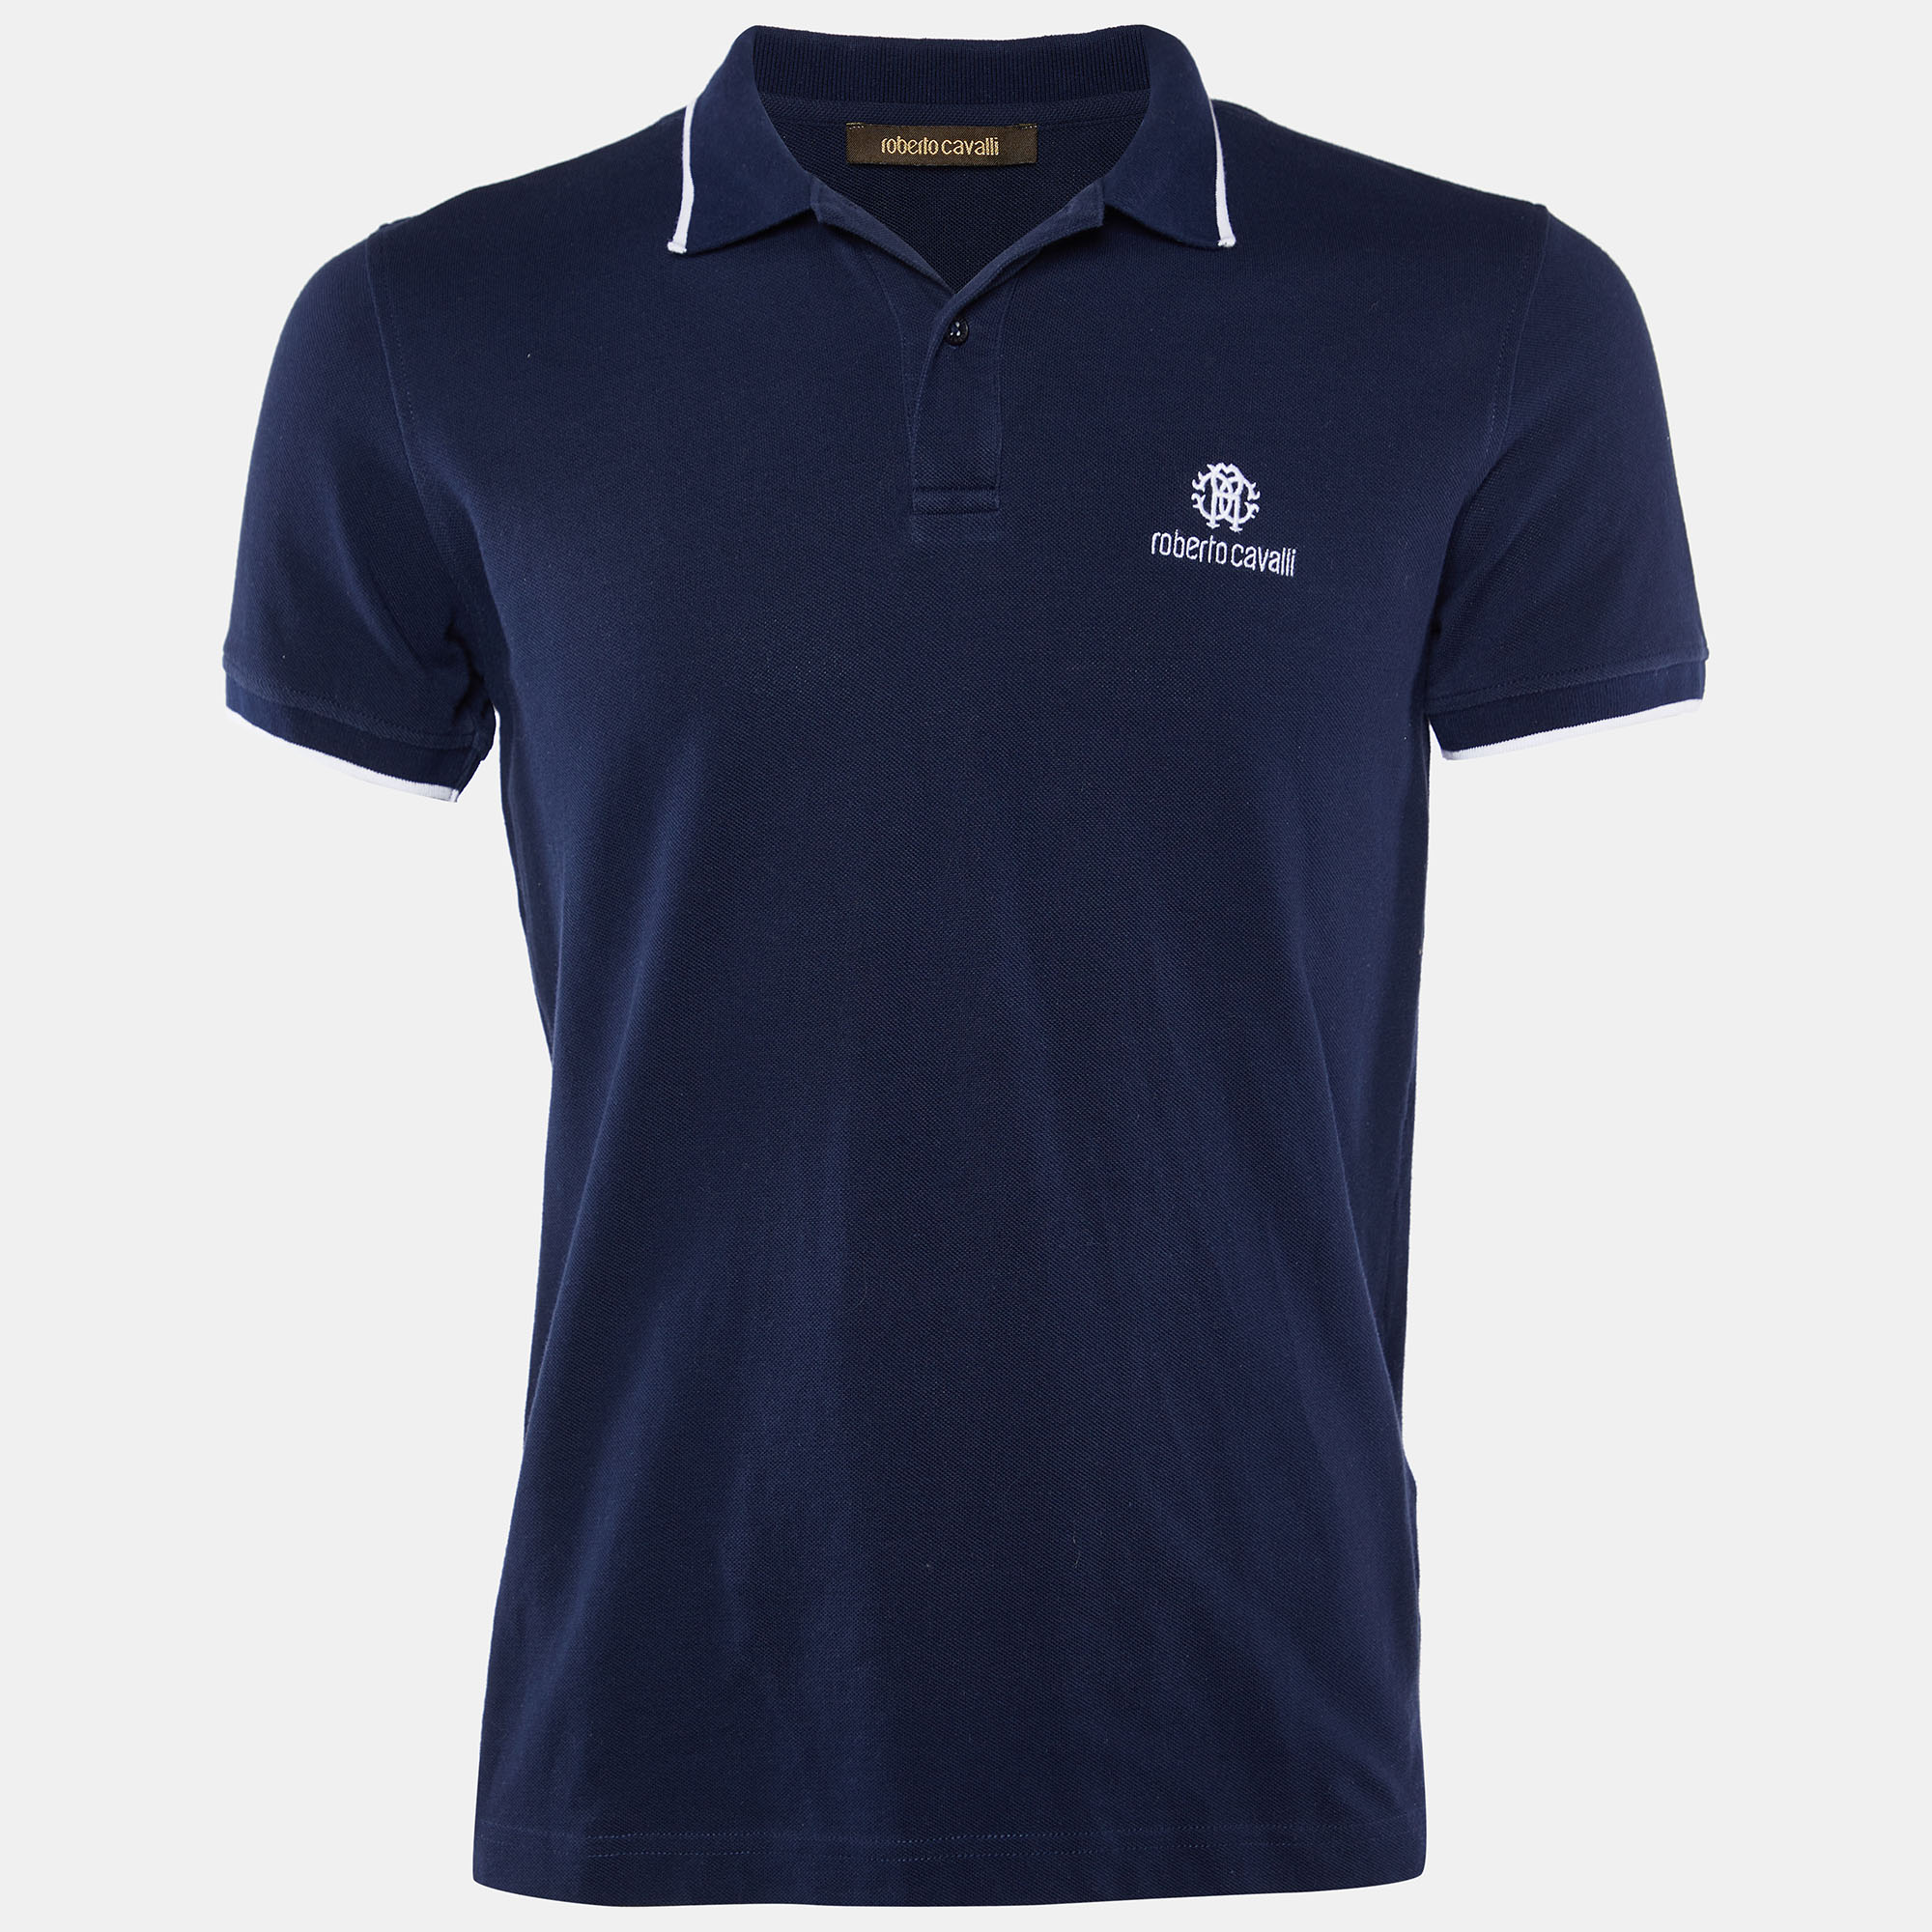 Roberto cavalli navy blue logo embroidered cotton polo t-shirt l